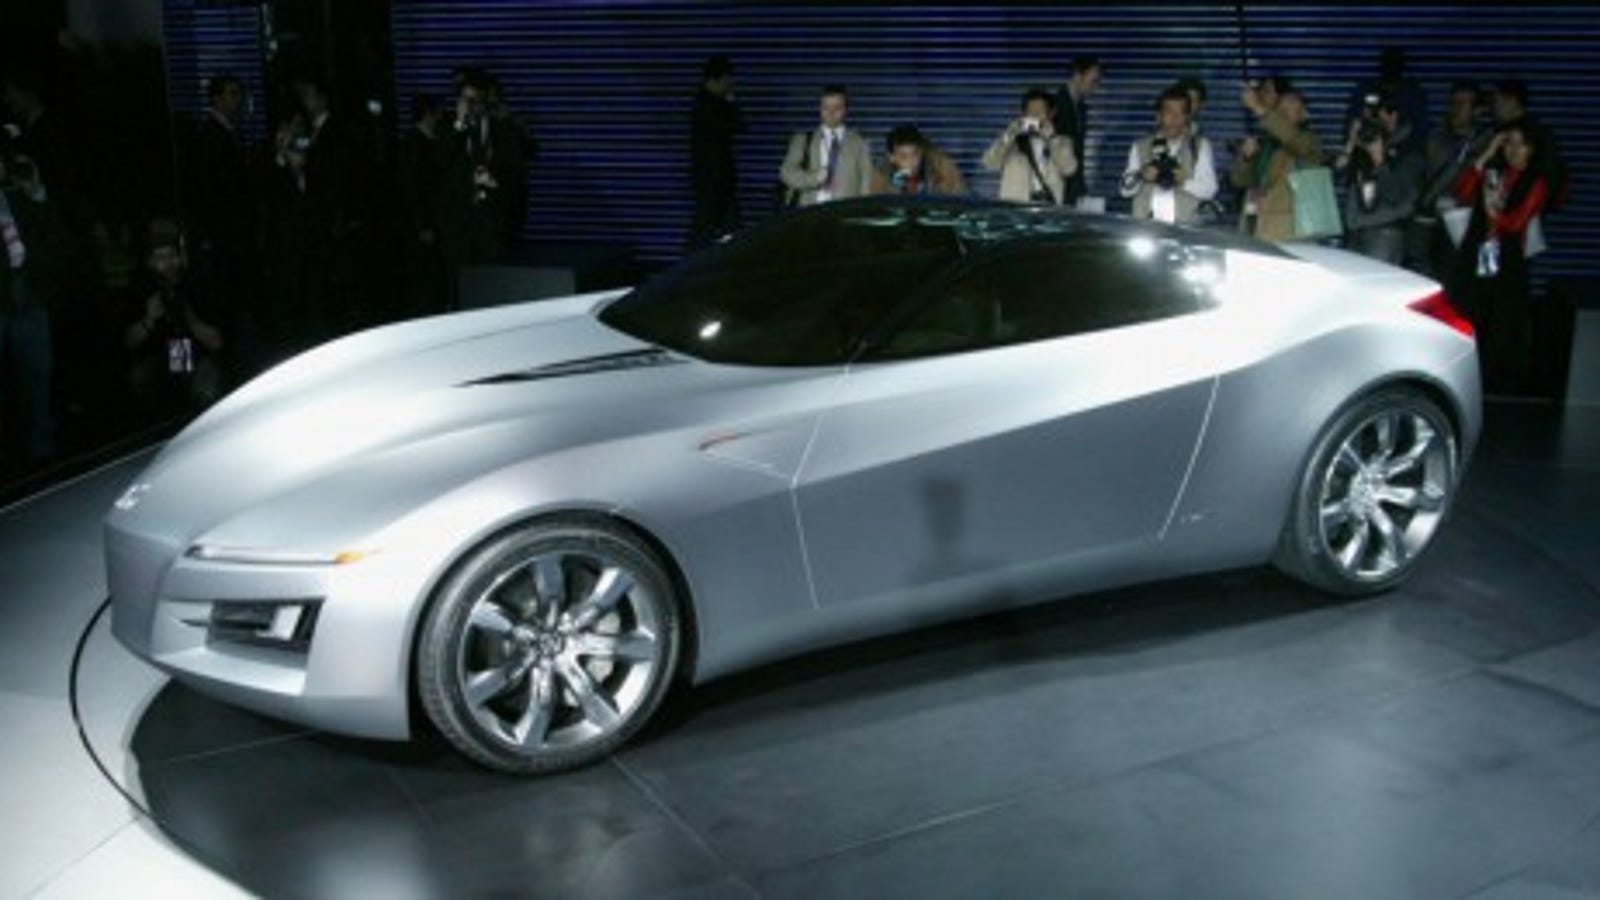 Detroit Auto Show: Acura Advanced Sports Car Concept